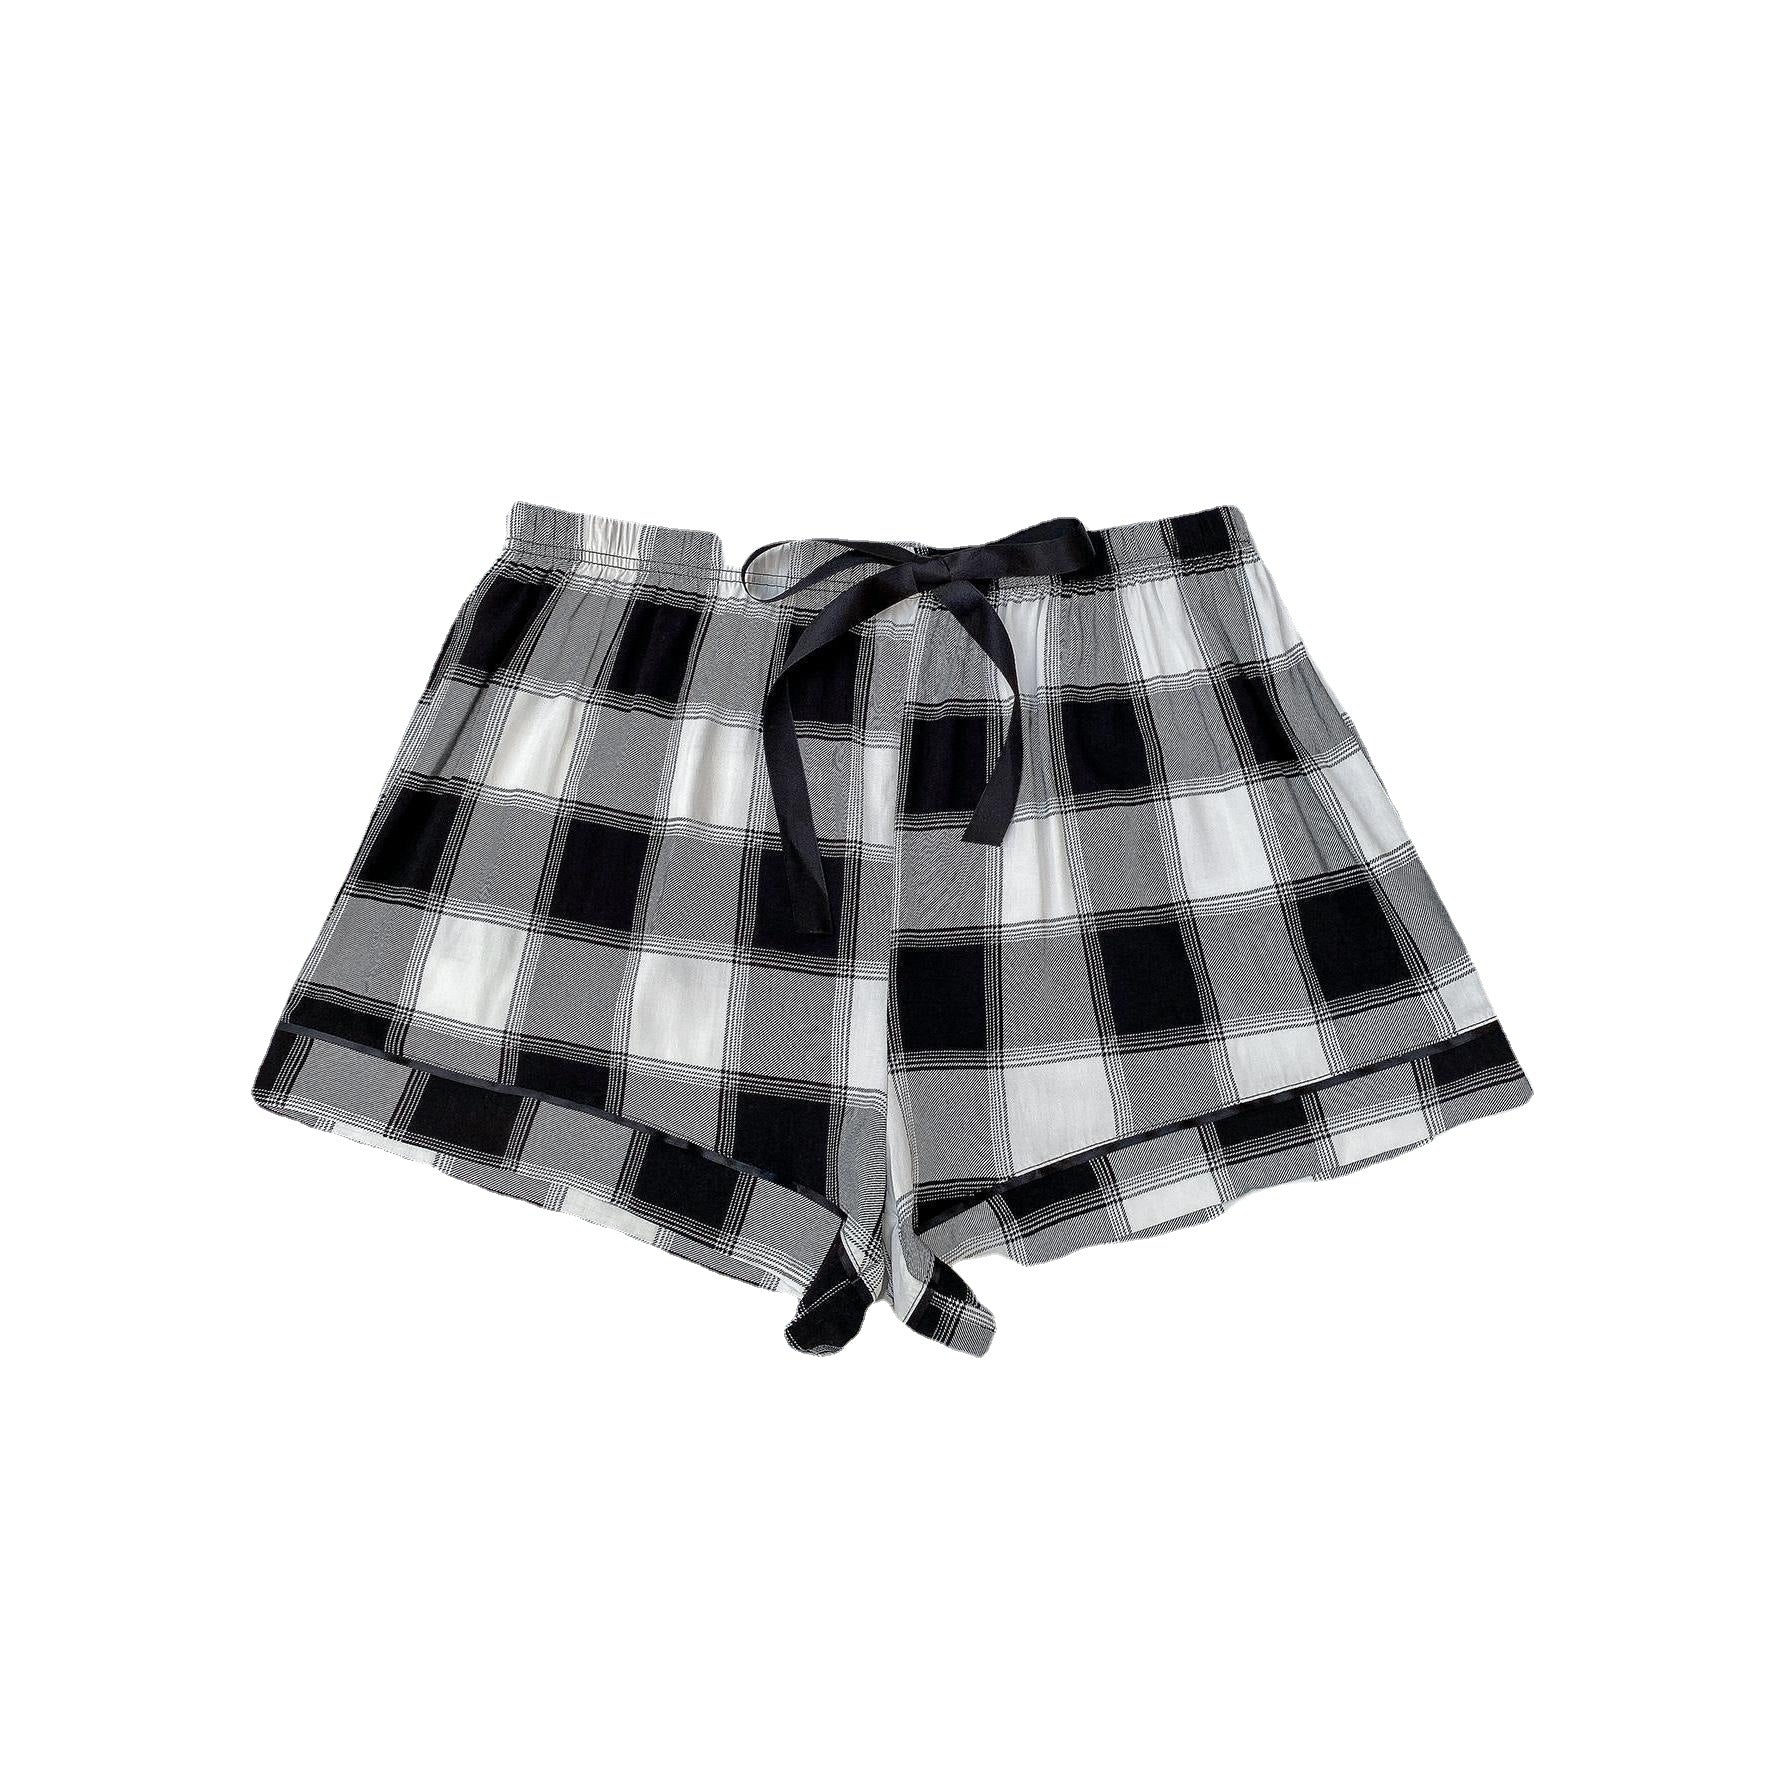 Plus Size Pajamas Women Plaid Drawstring Shorts Spring Summer Home Pants